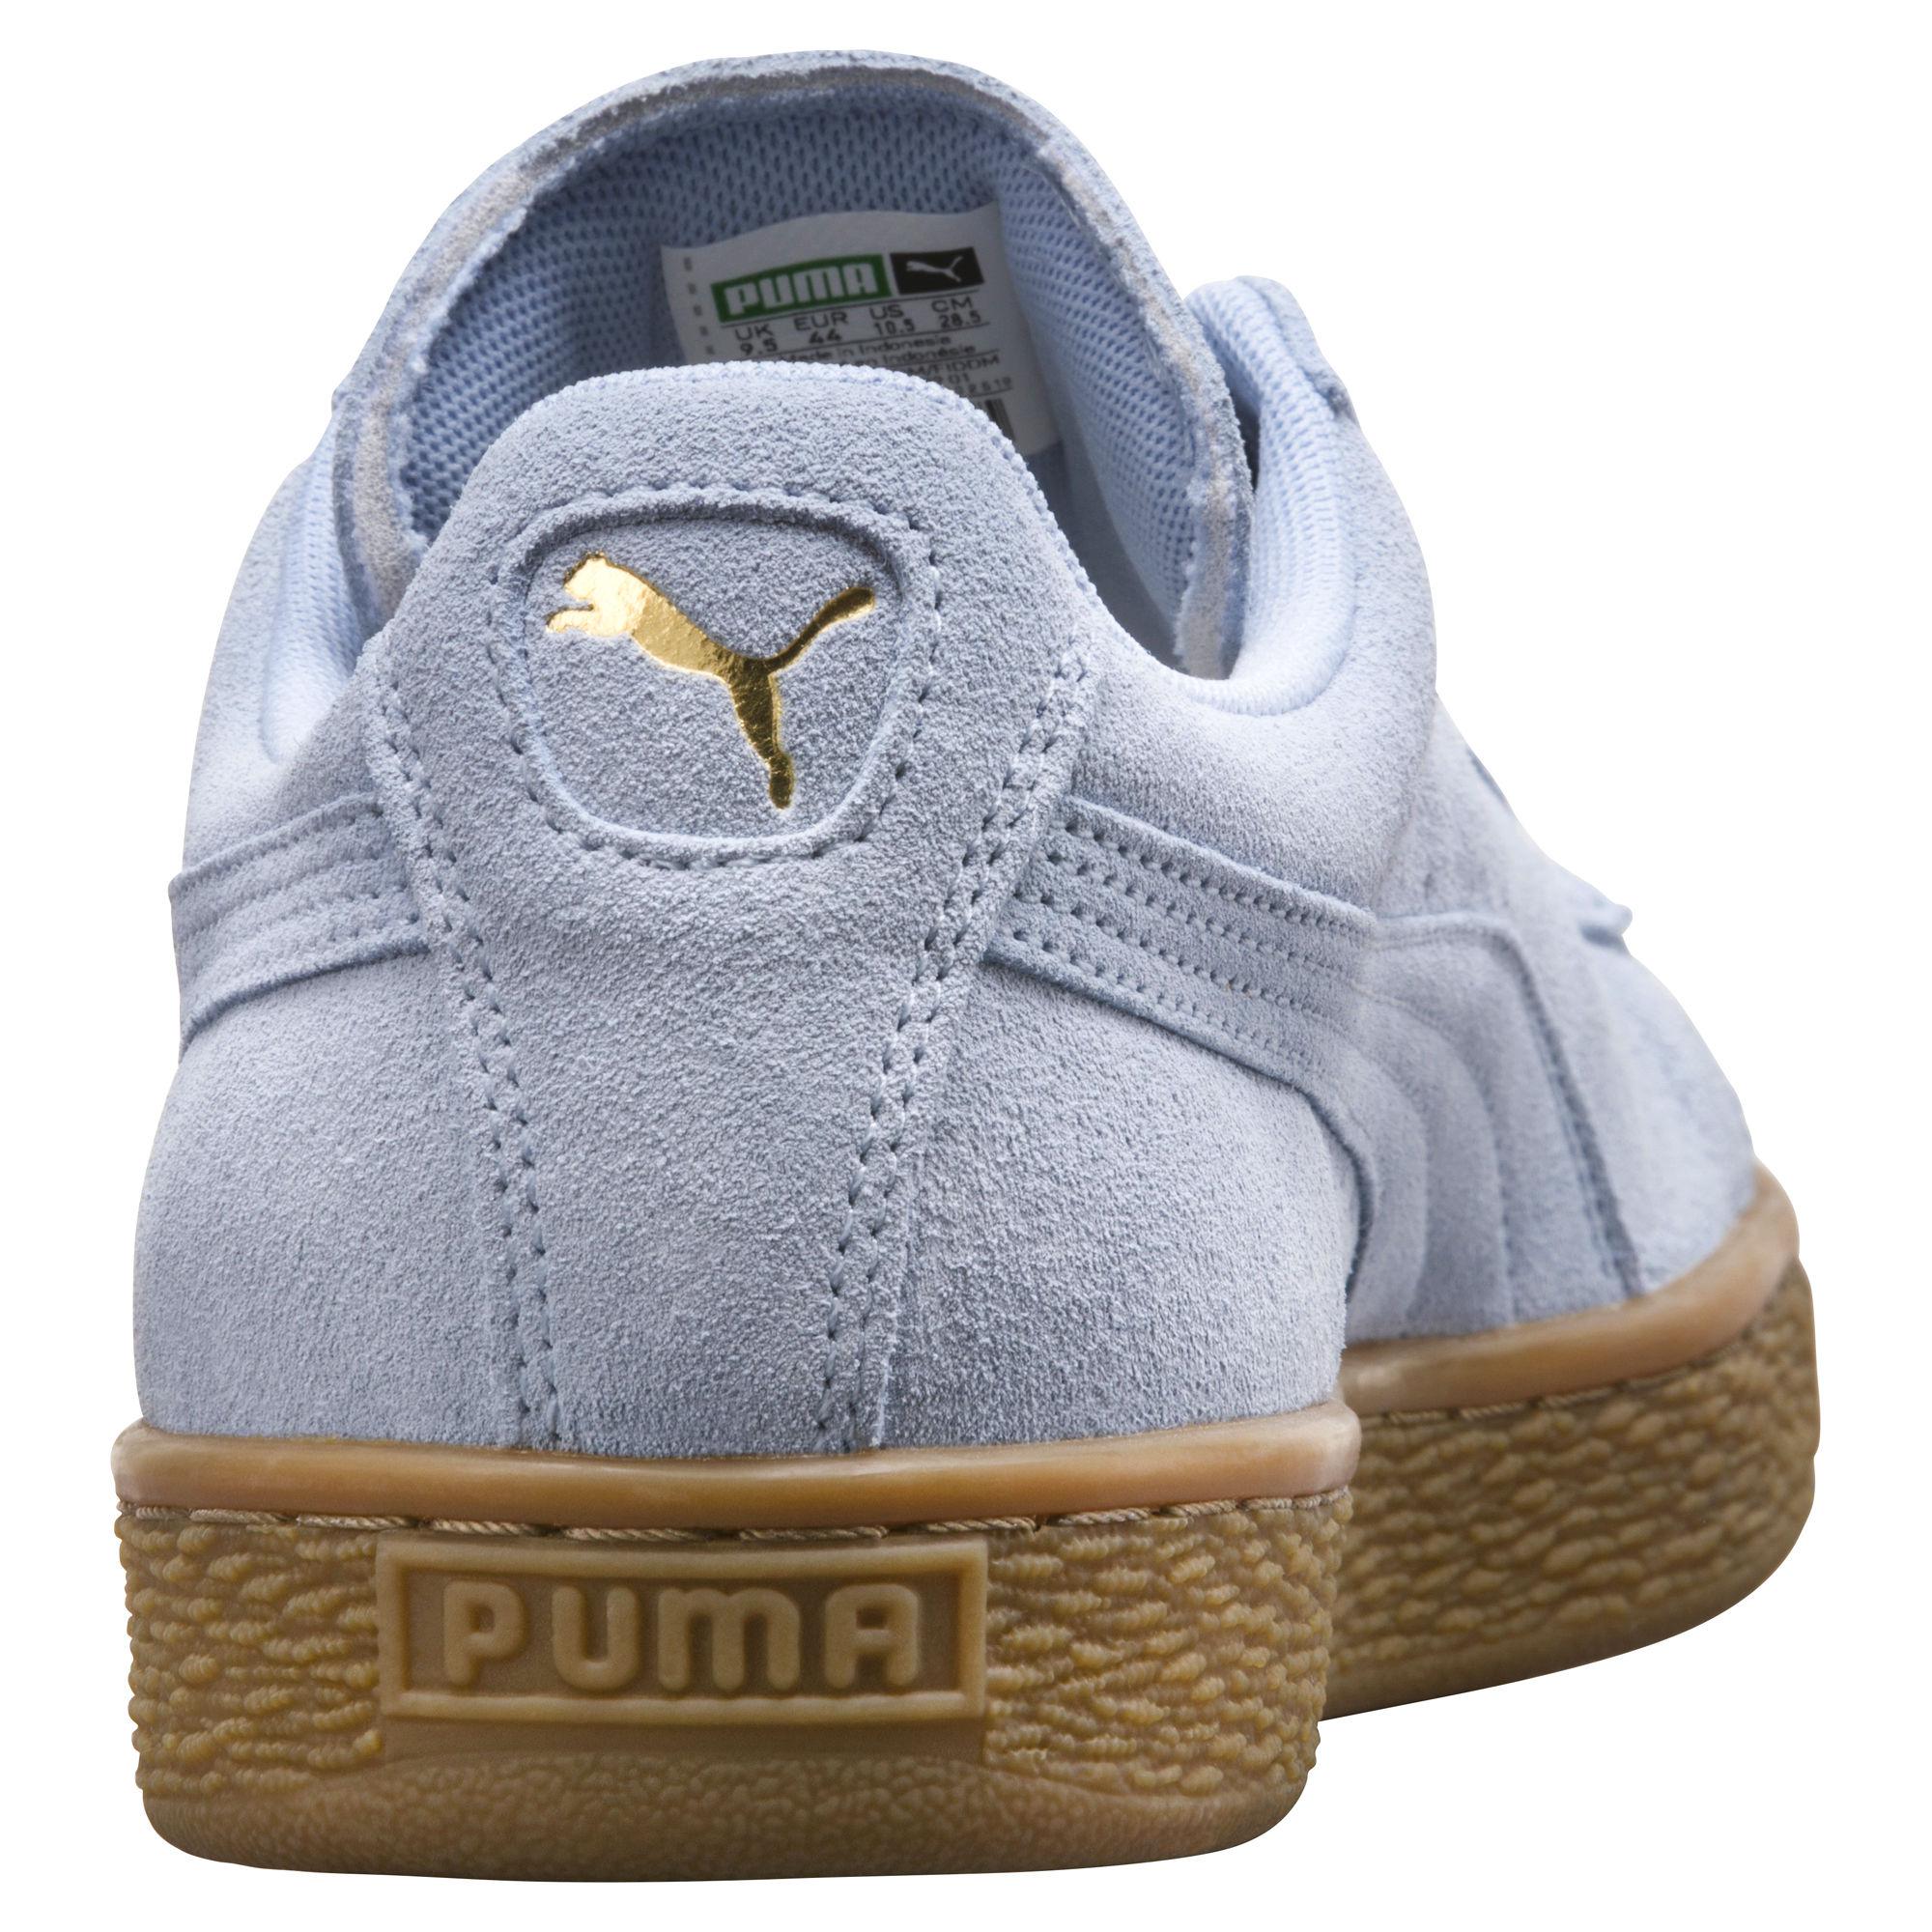 PUMA Suede Classic Gum Sneakers in Blue for Men - Lyst